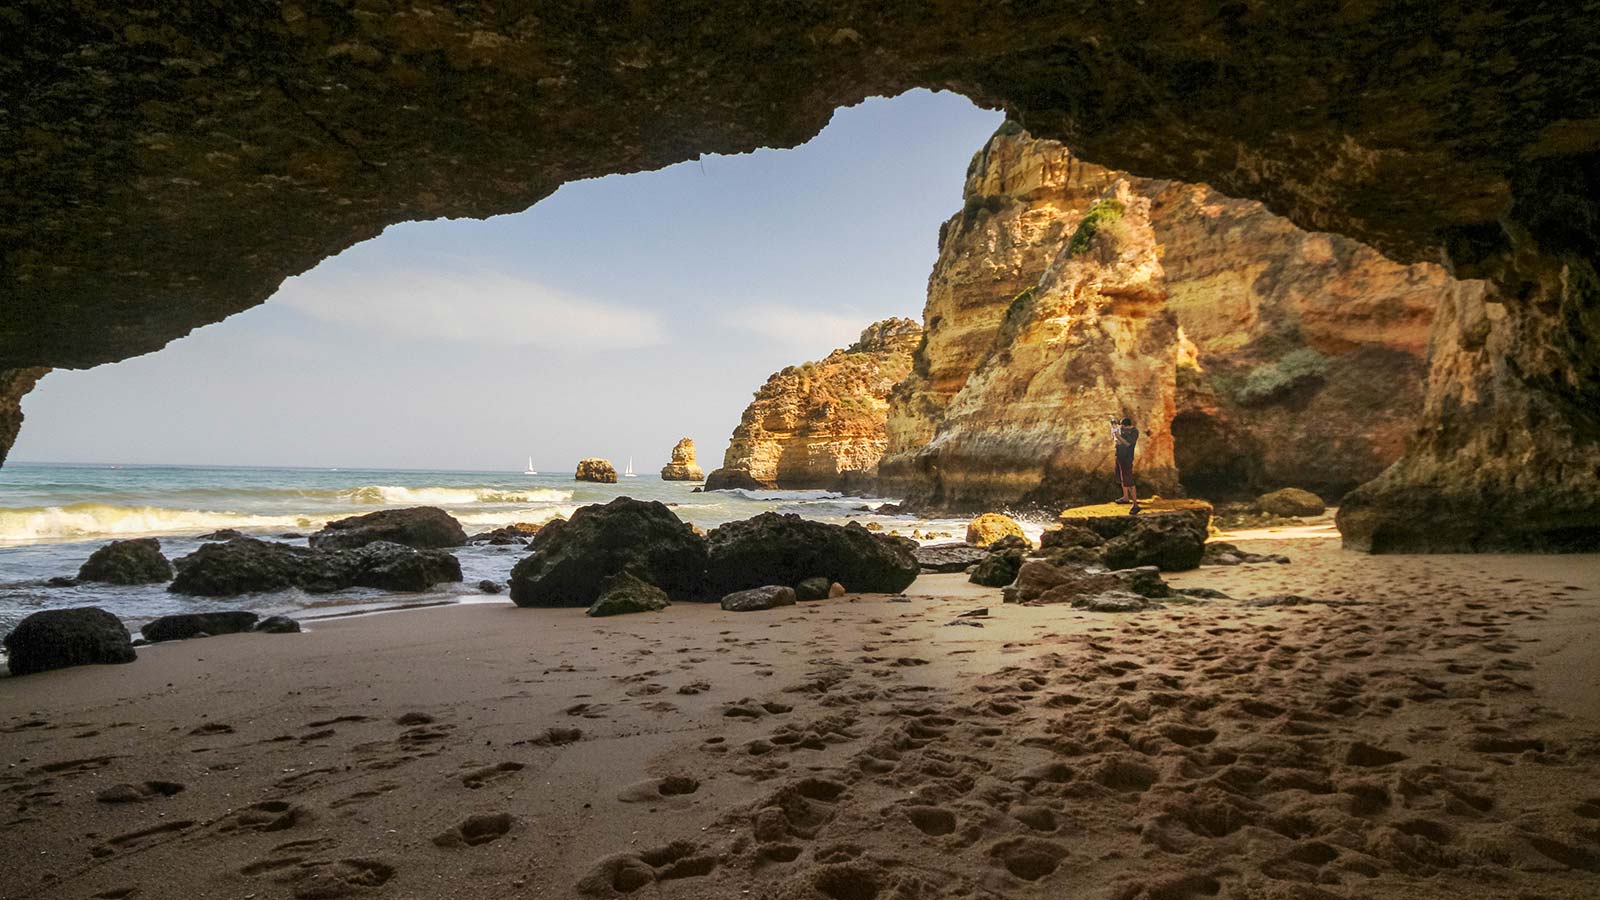 Algarve Beaches: Beach Bums and Sea Caves